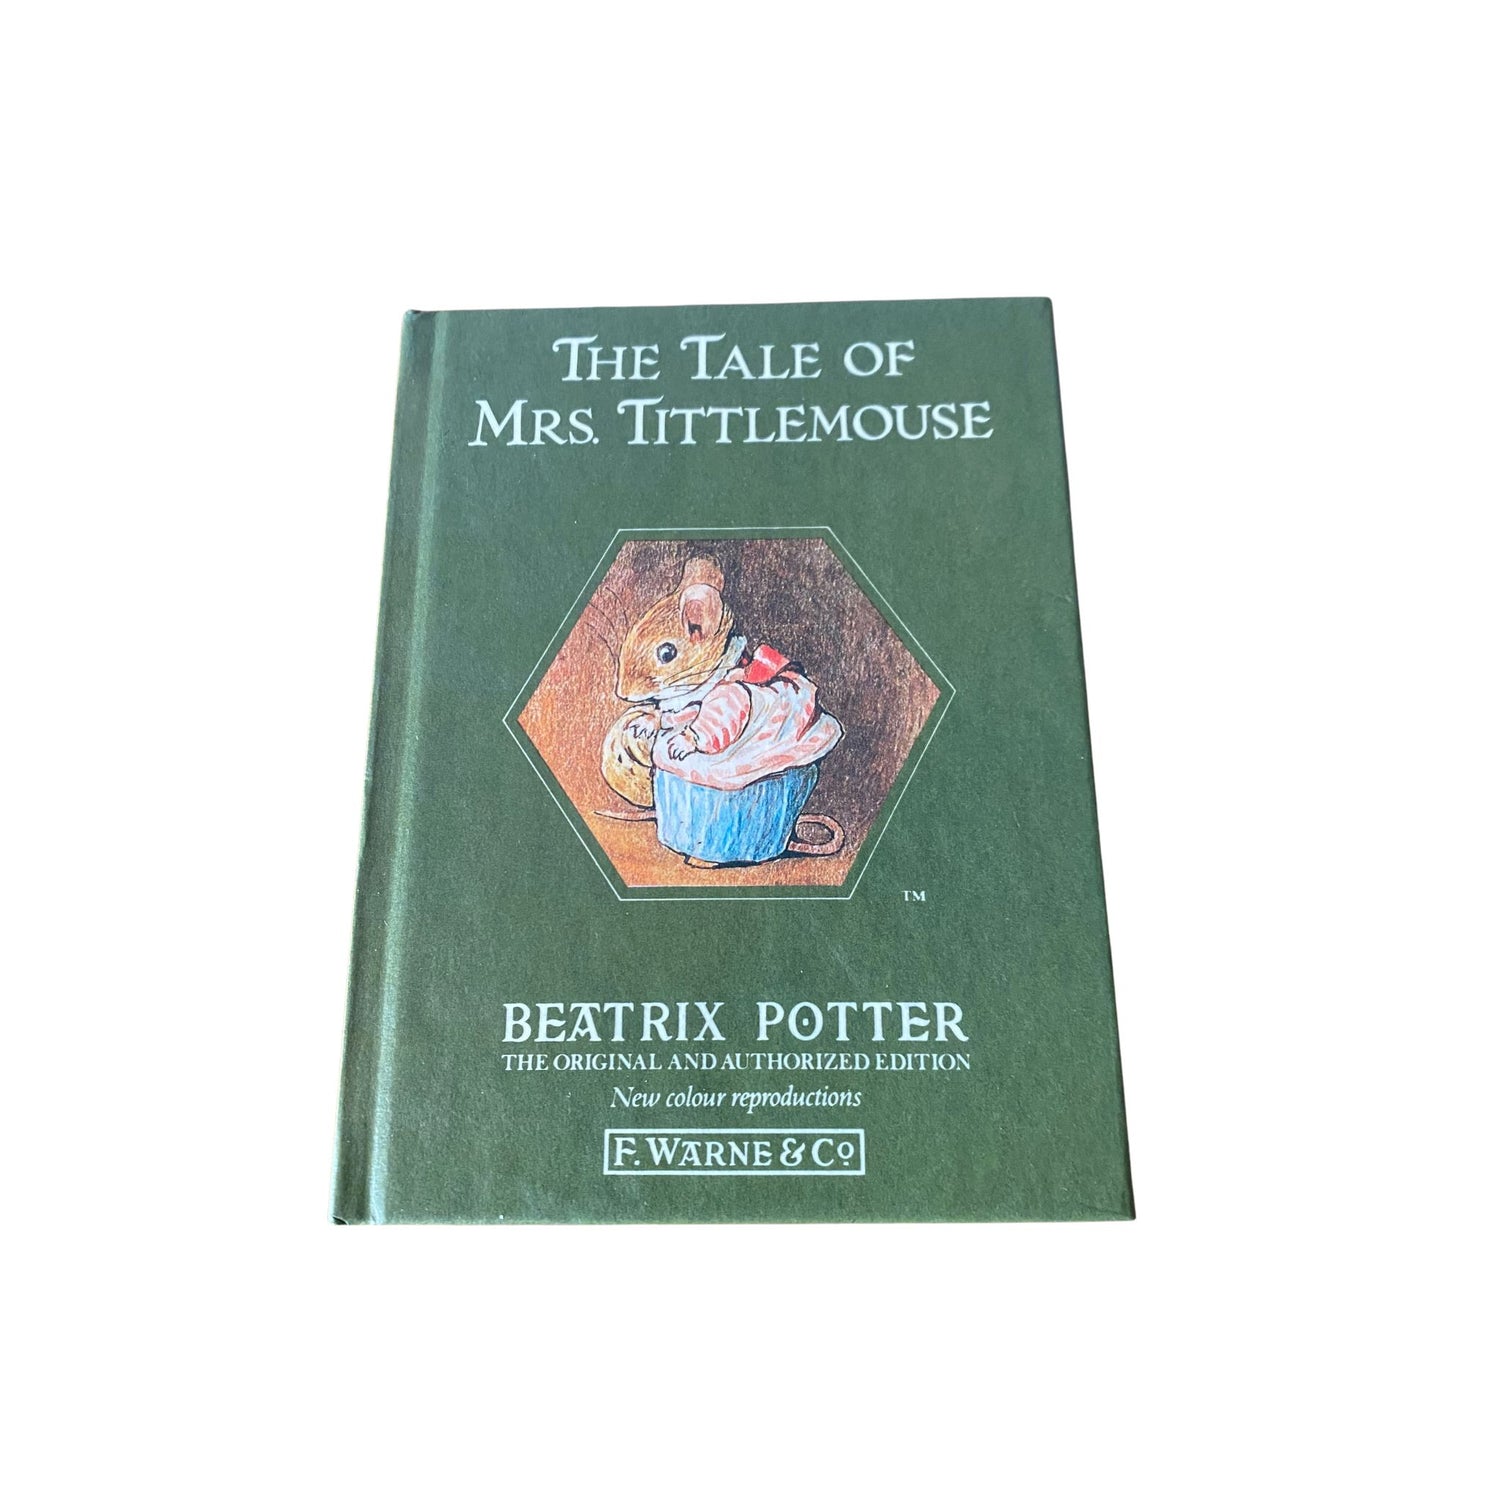 Vintage copy of Beatrix Potter’s The Tale of Mrs Tittlemouse 